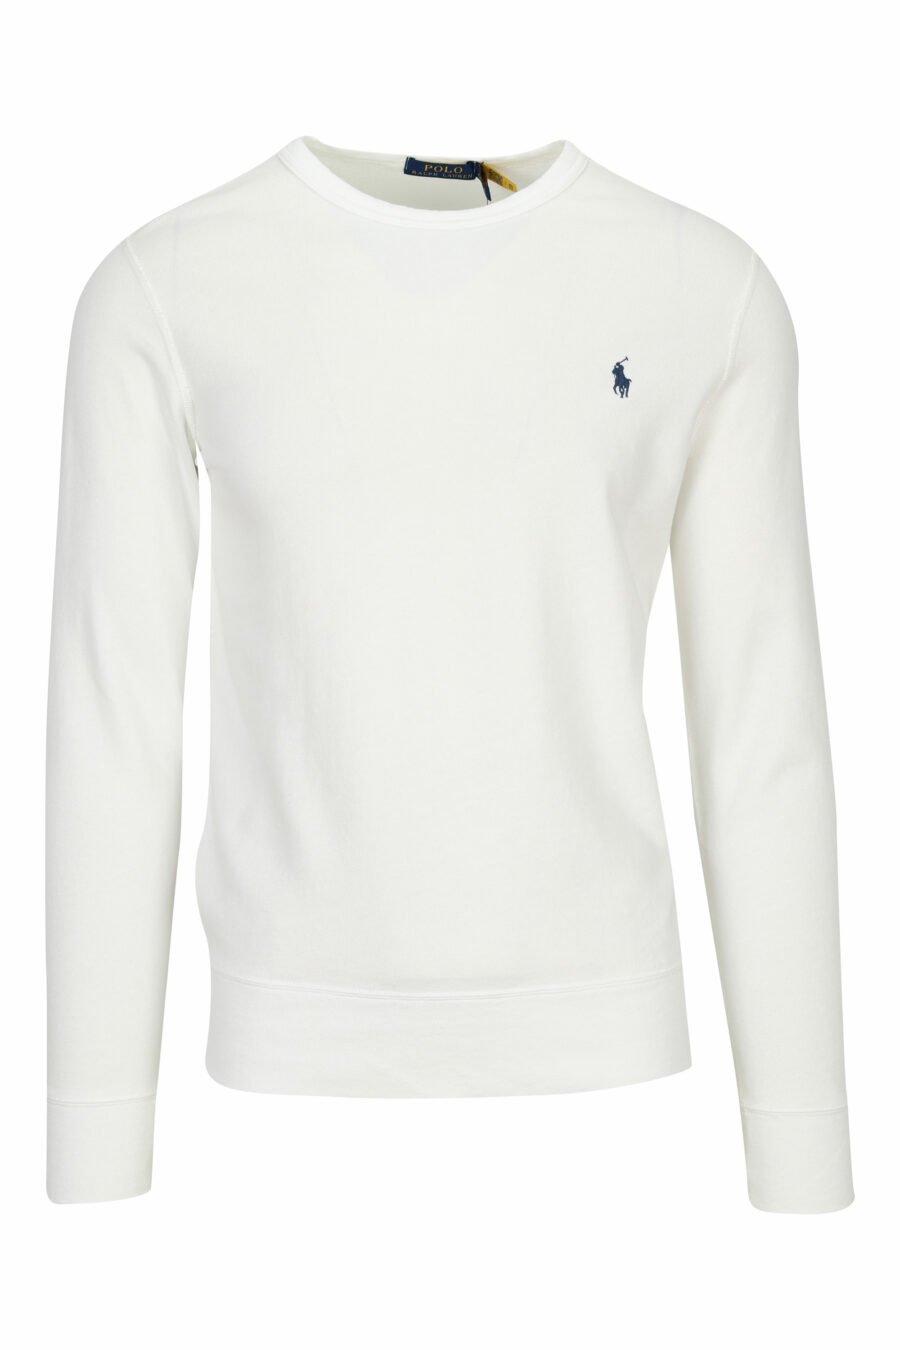 White sweatshirt with minilogue "polo" - 3616851410768